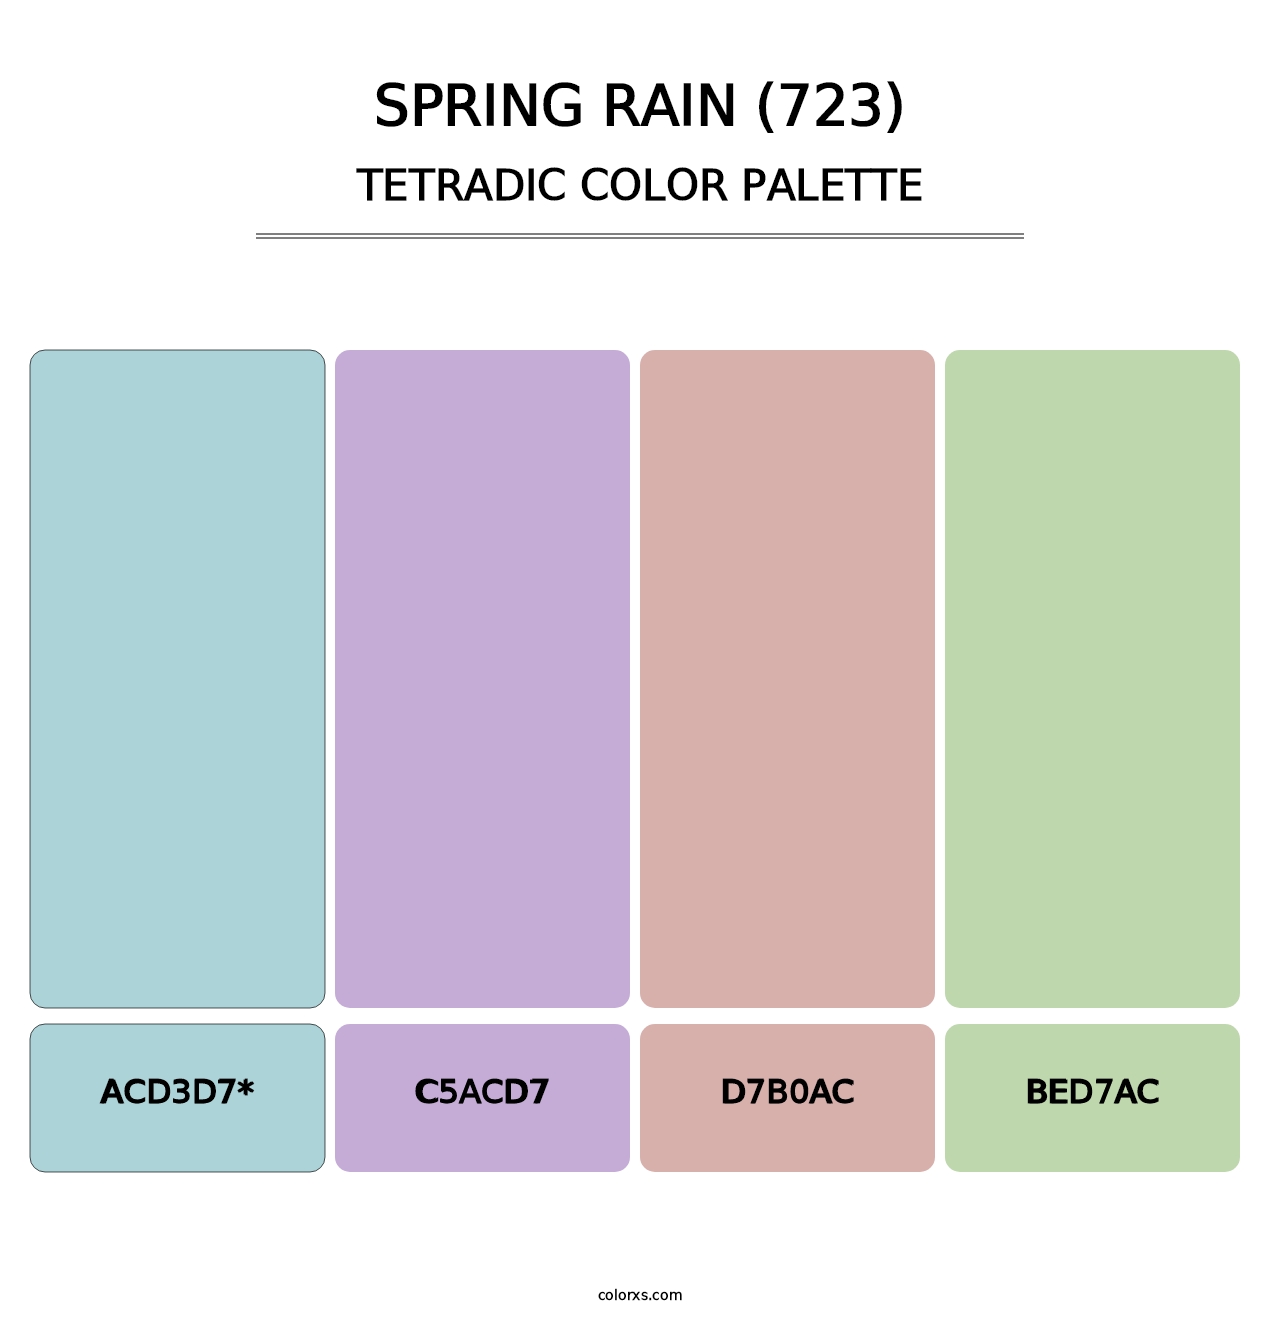 Spring Rain (723) - Tetradic Color Palette